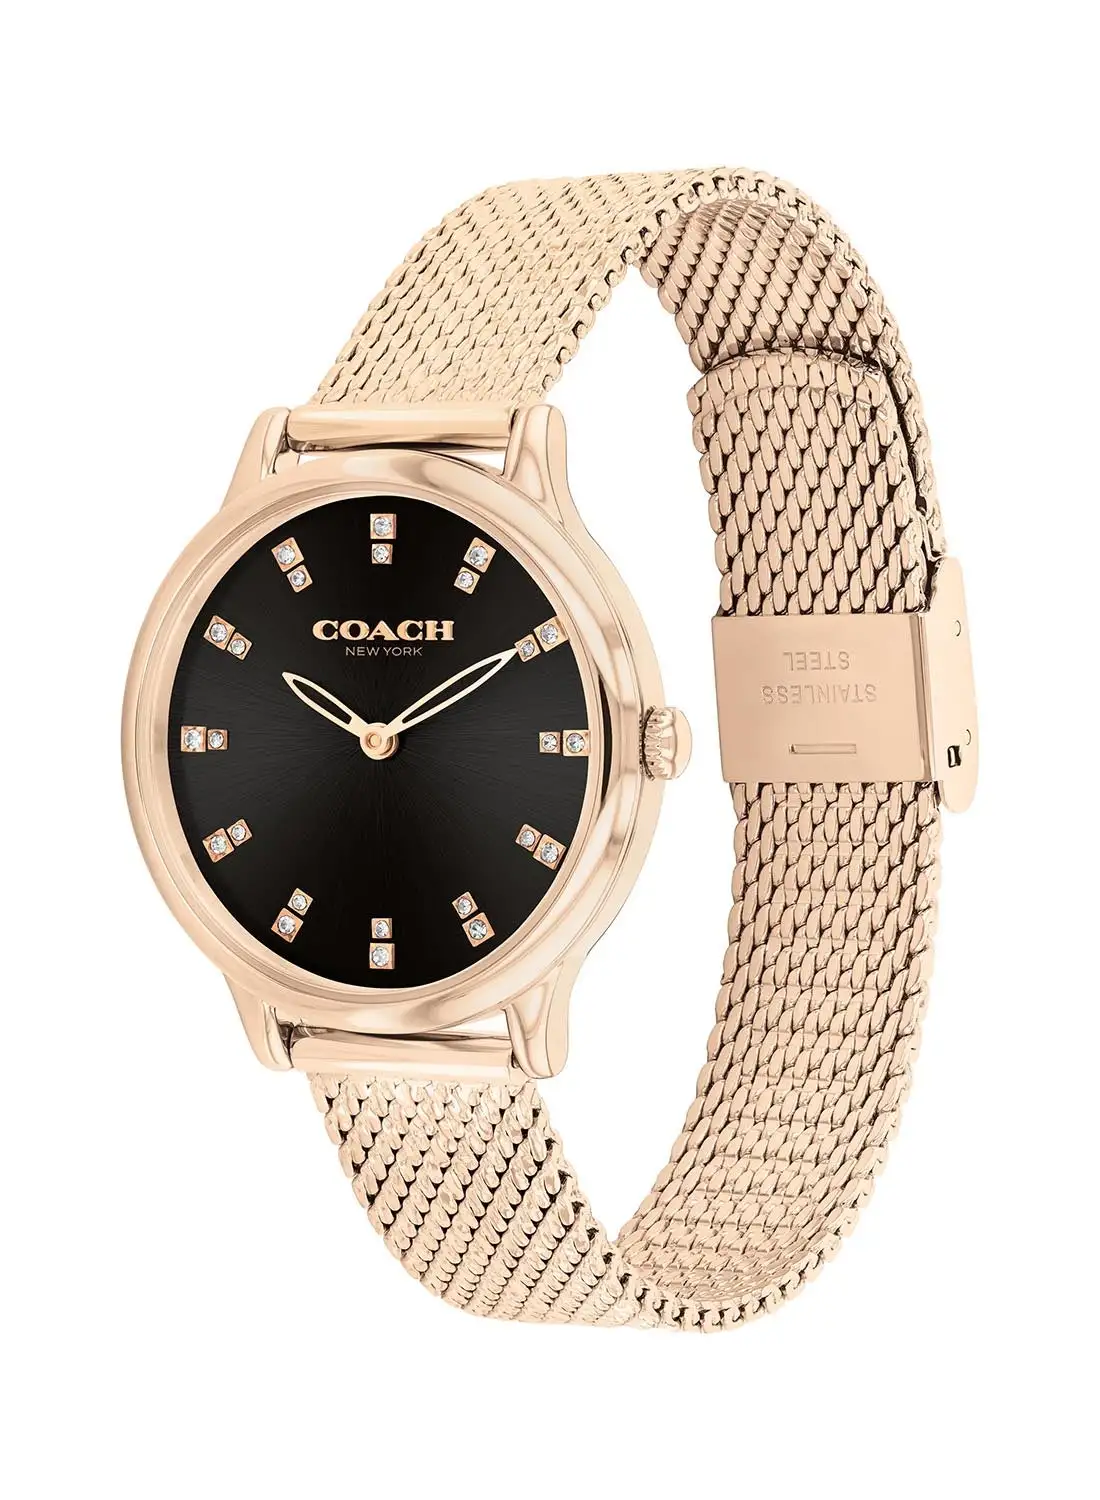 COACH Women's Analog Round Shape Stainless Steel Wrist Watch 14504217 - 32 Mm